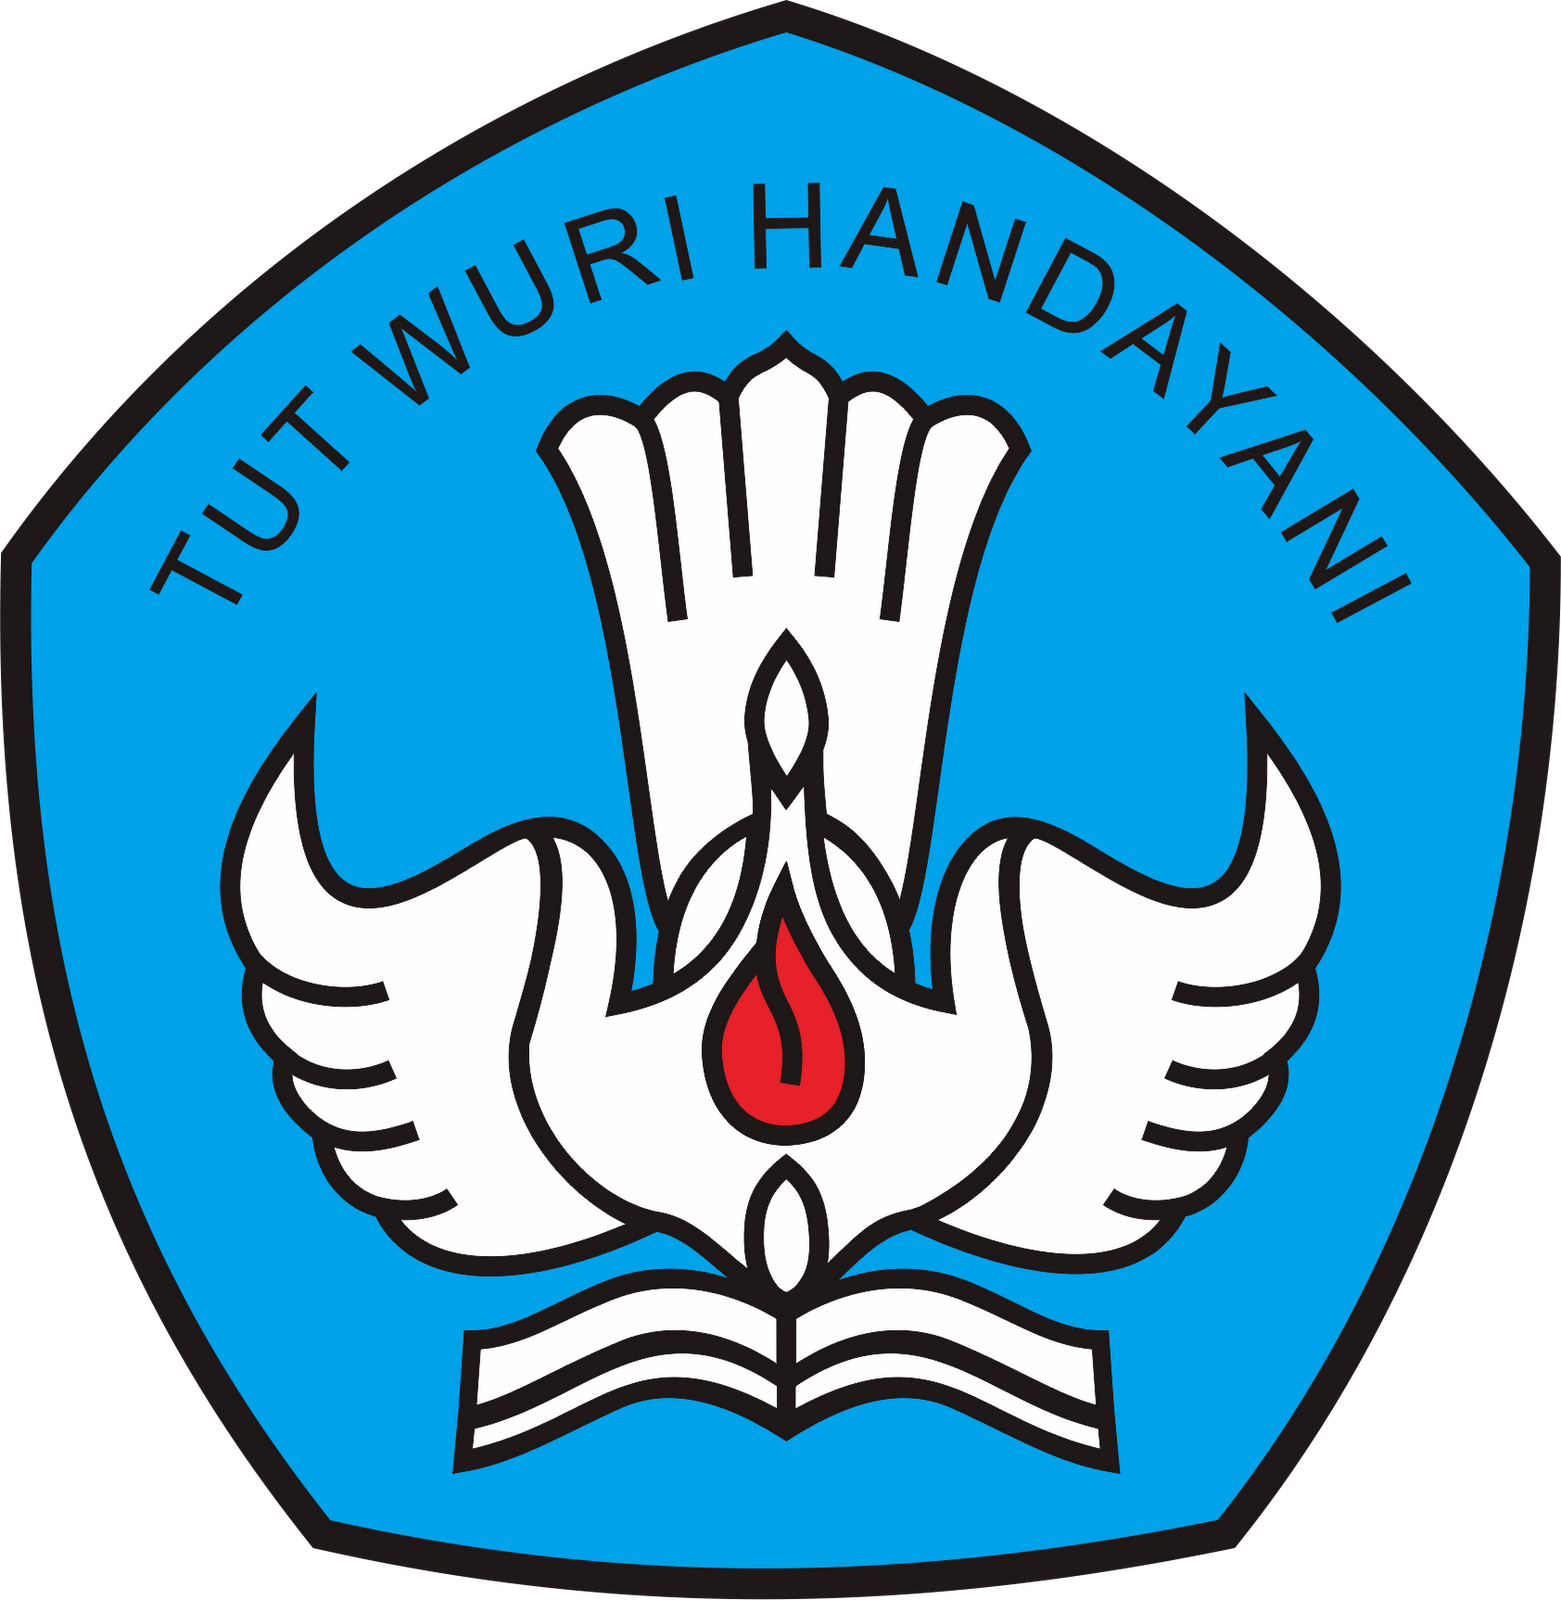 Lambang Logo Logo Depdiknas Tut Wuri Handayani